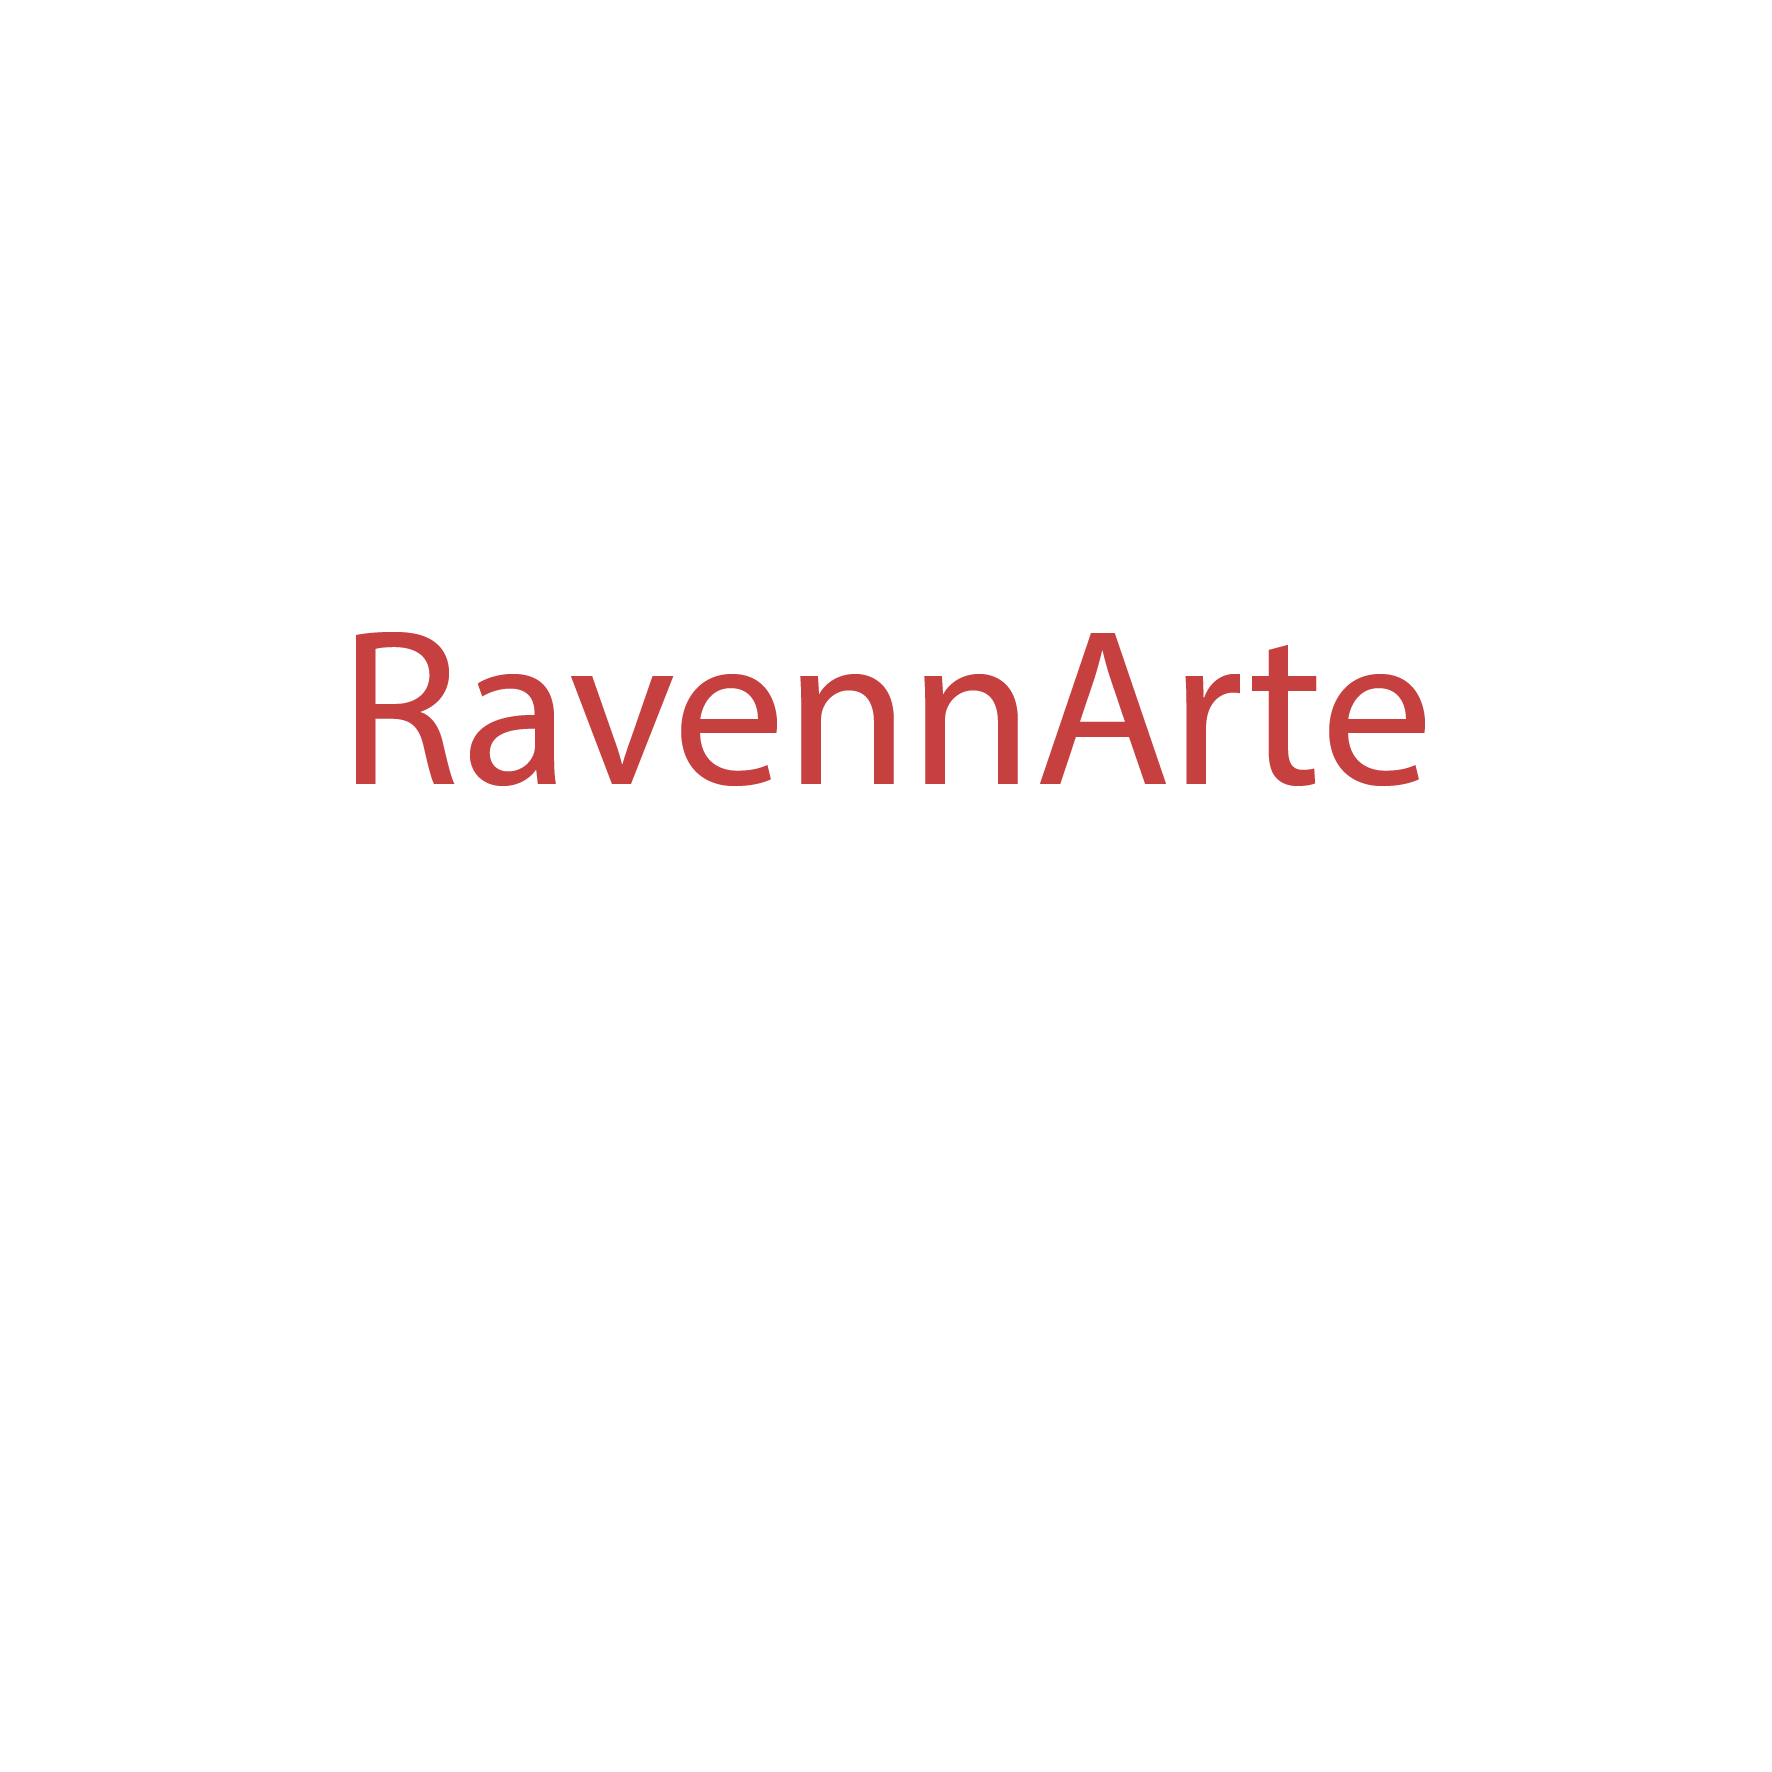 RavennArte